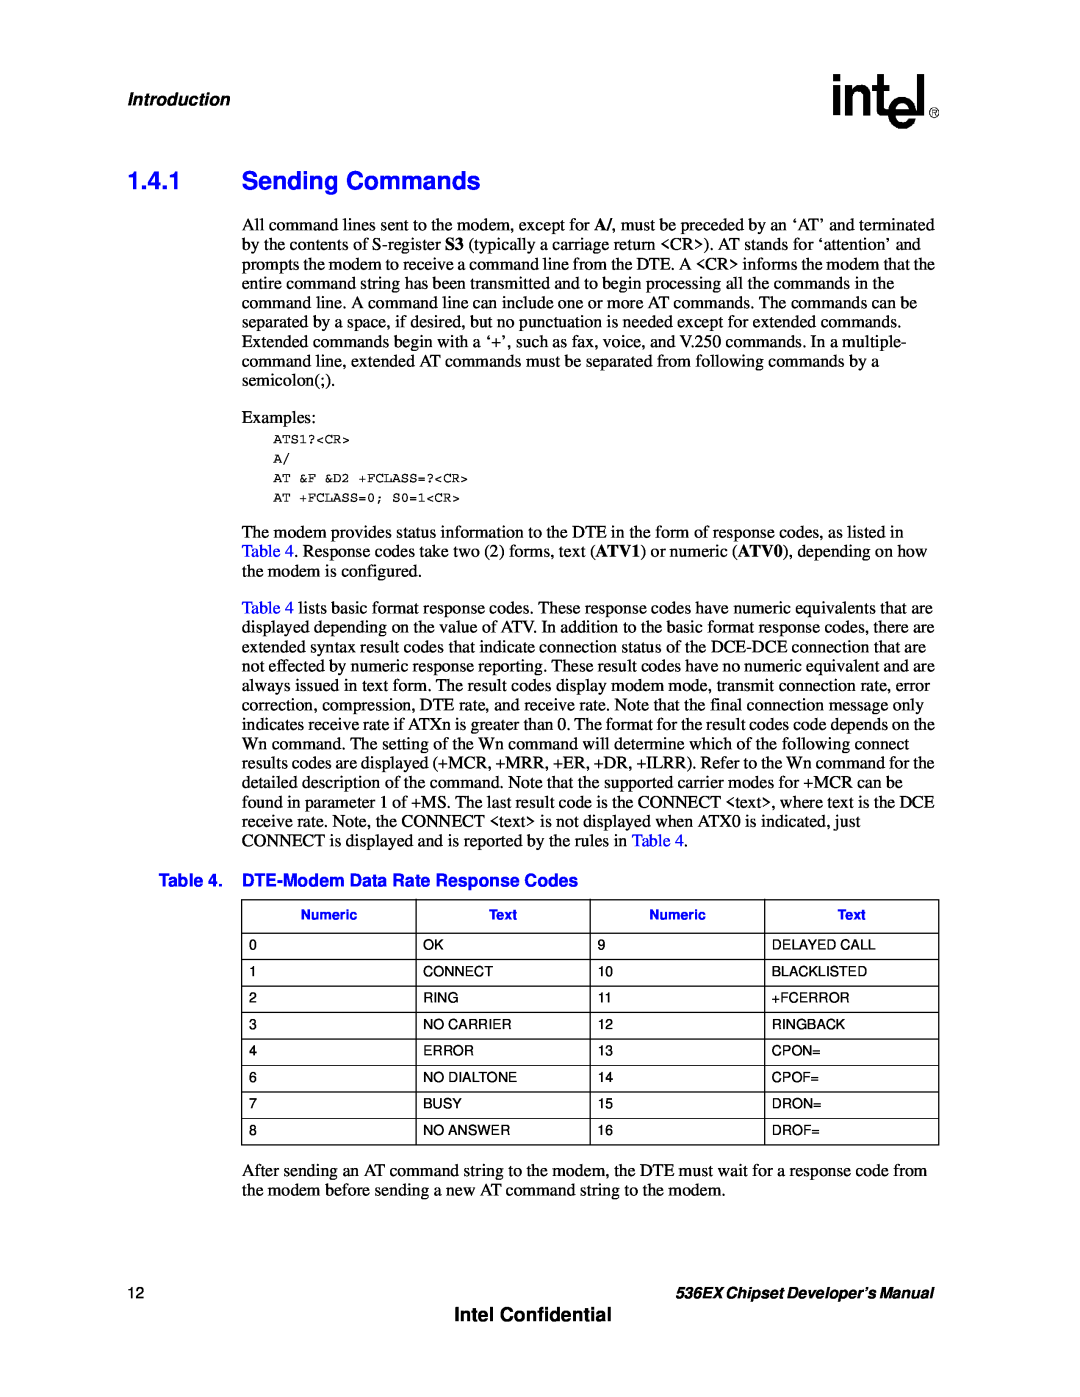 Intel 537EX manual 1.4.1Sending Commands, Intel Confidential, Introduction, DTE-ModemData Rate Response Codes 